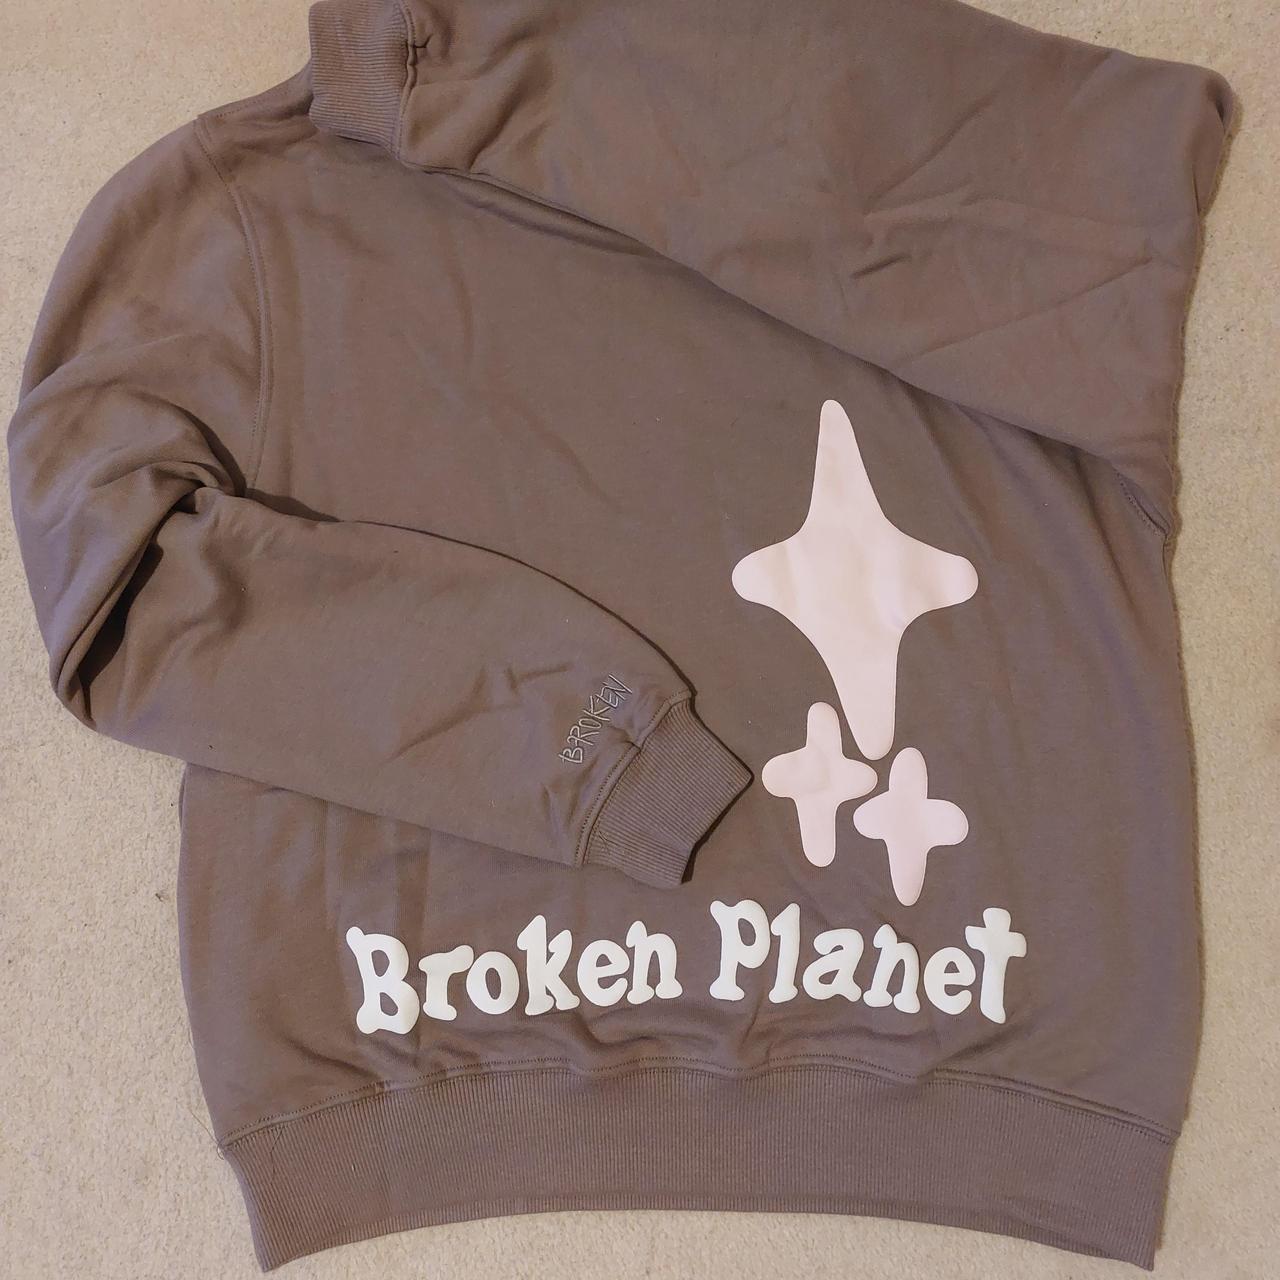 stuck in mirage hoodie - Broken Planet Hoodie